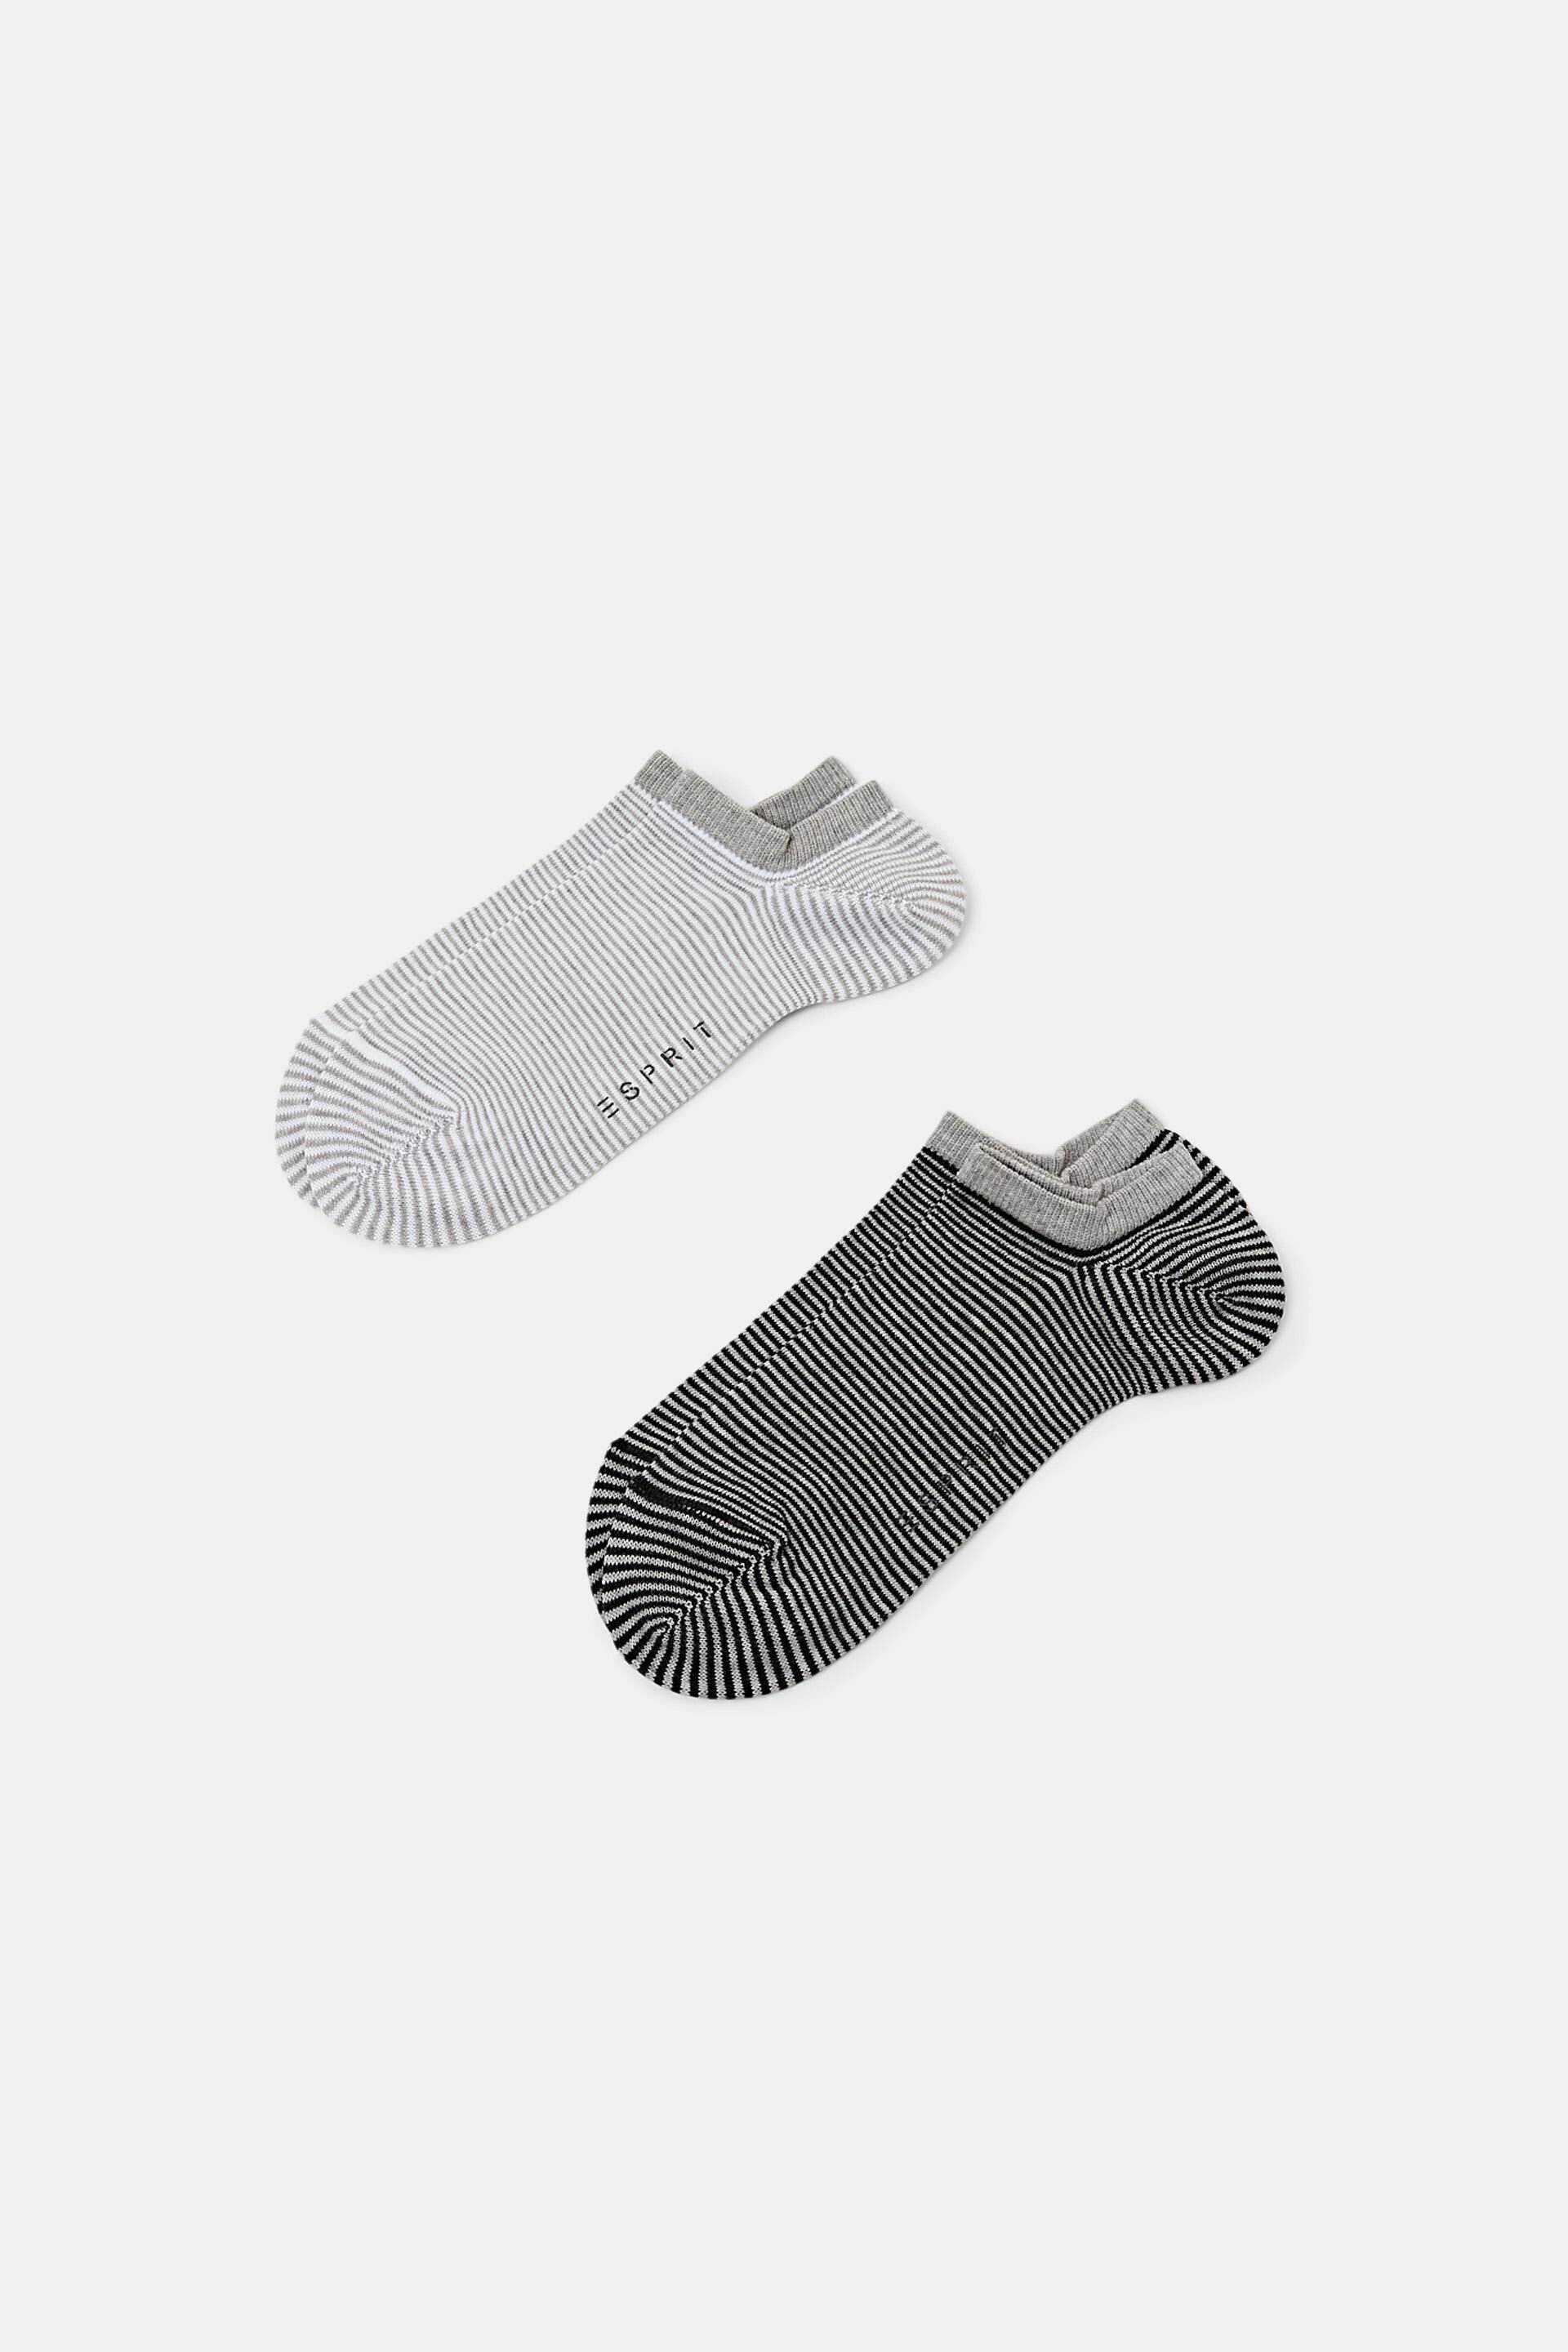 Esprit organic cotton sneaker socks, 2-pack